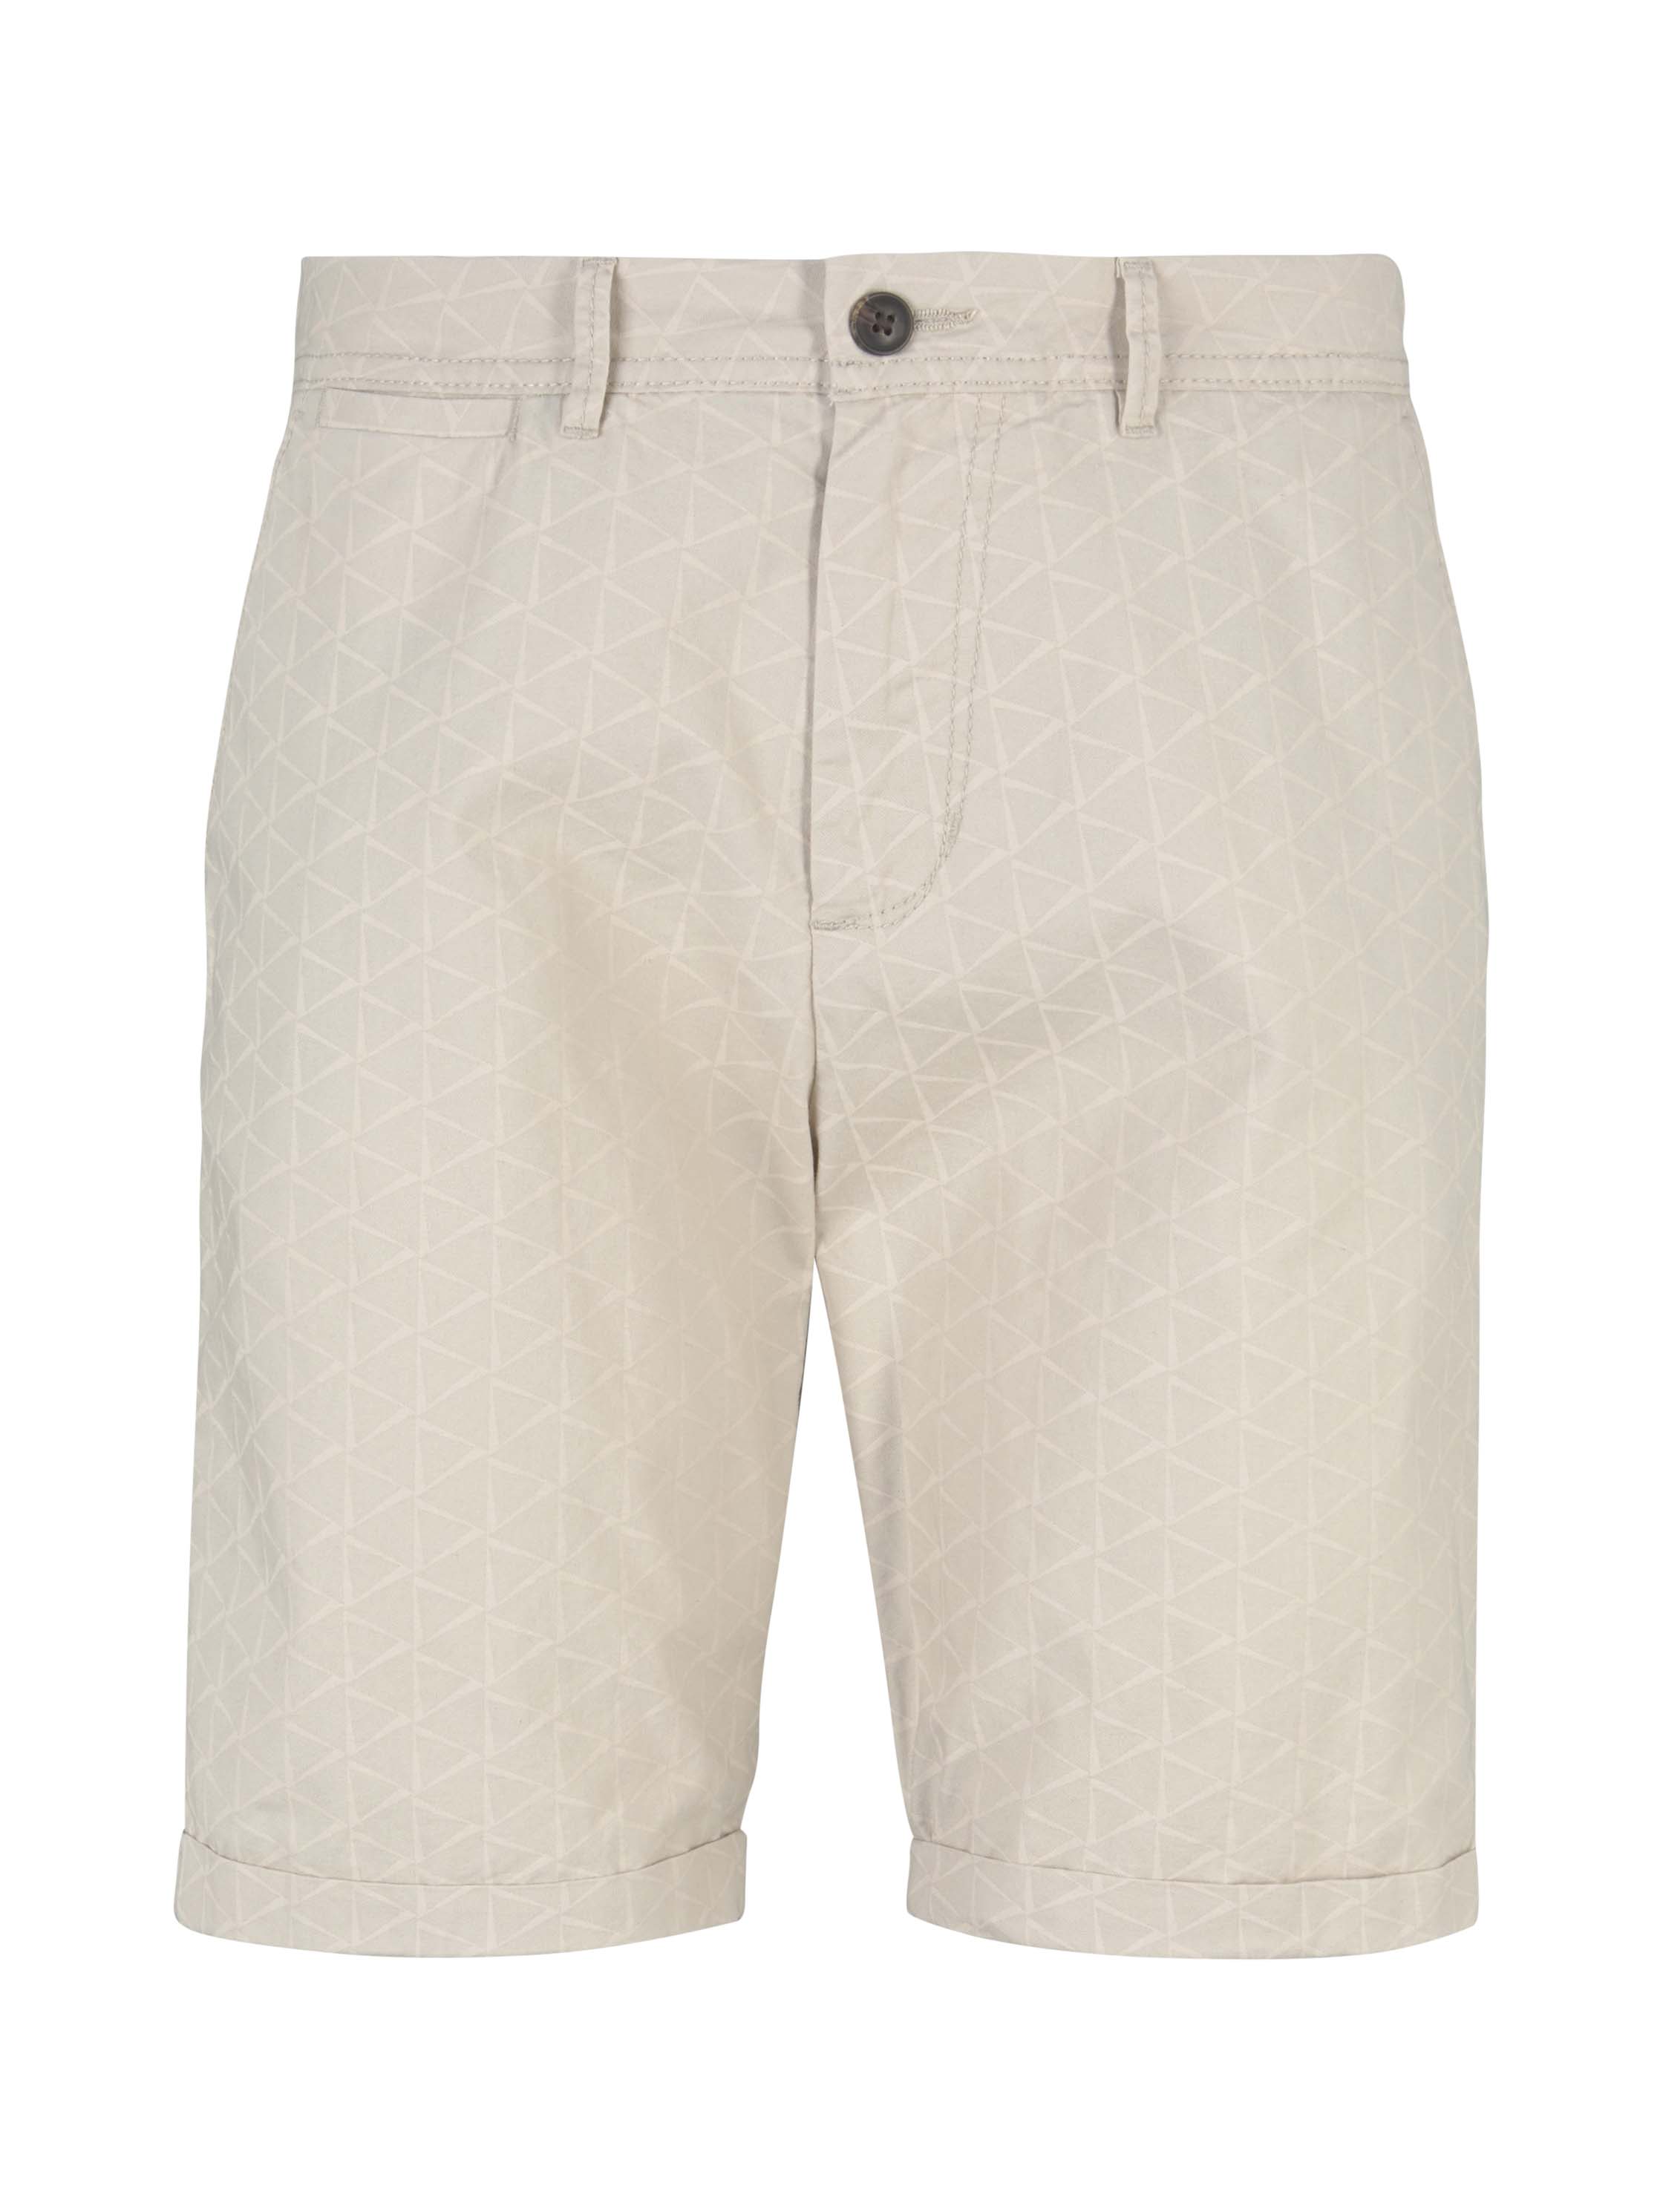 aop shorts, beige big triangle print